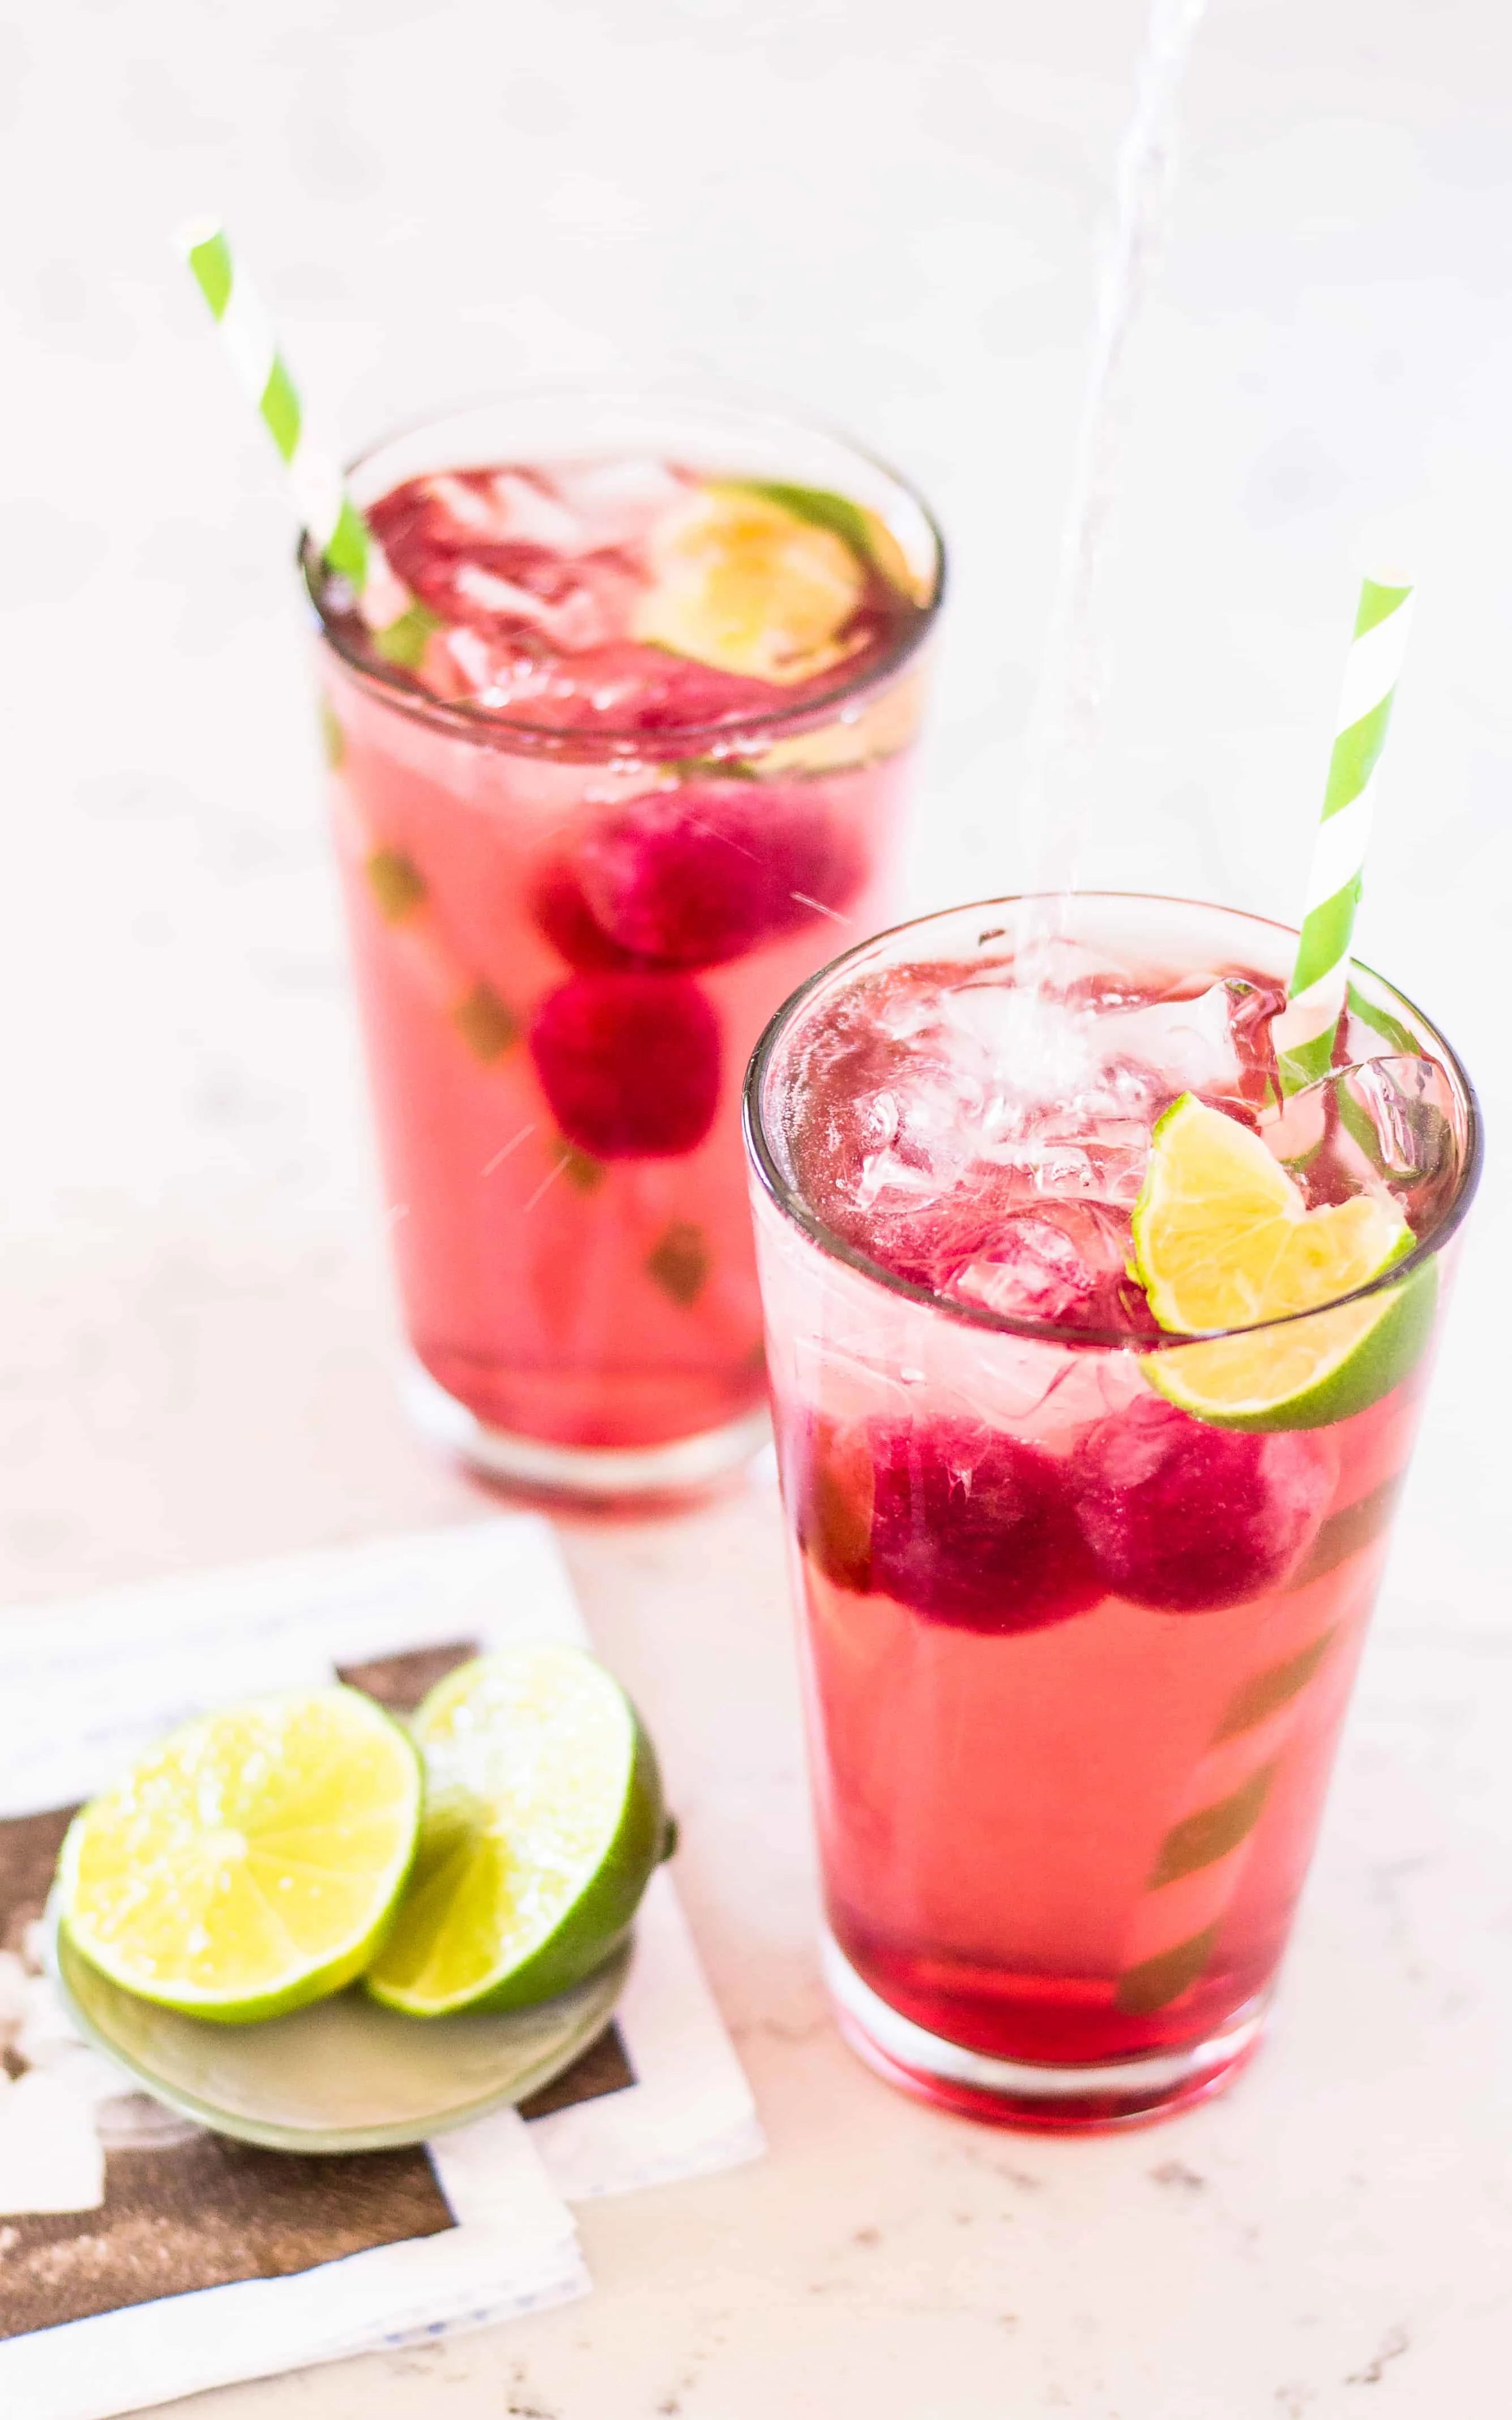 Lime Sparkling Water makes A Grape Lime Vodka Rickey Drink - Slick Rick! | Take Two Tapas | #LimeRickey #ArcticCircle #Sonic #GrapeLimeRickey #SlickRick #CocktailRecipe #Cocktails #MocktailRecipes